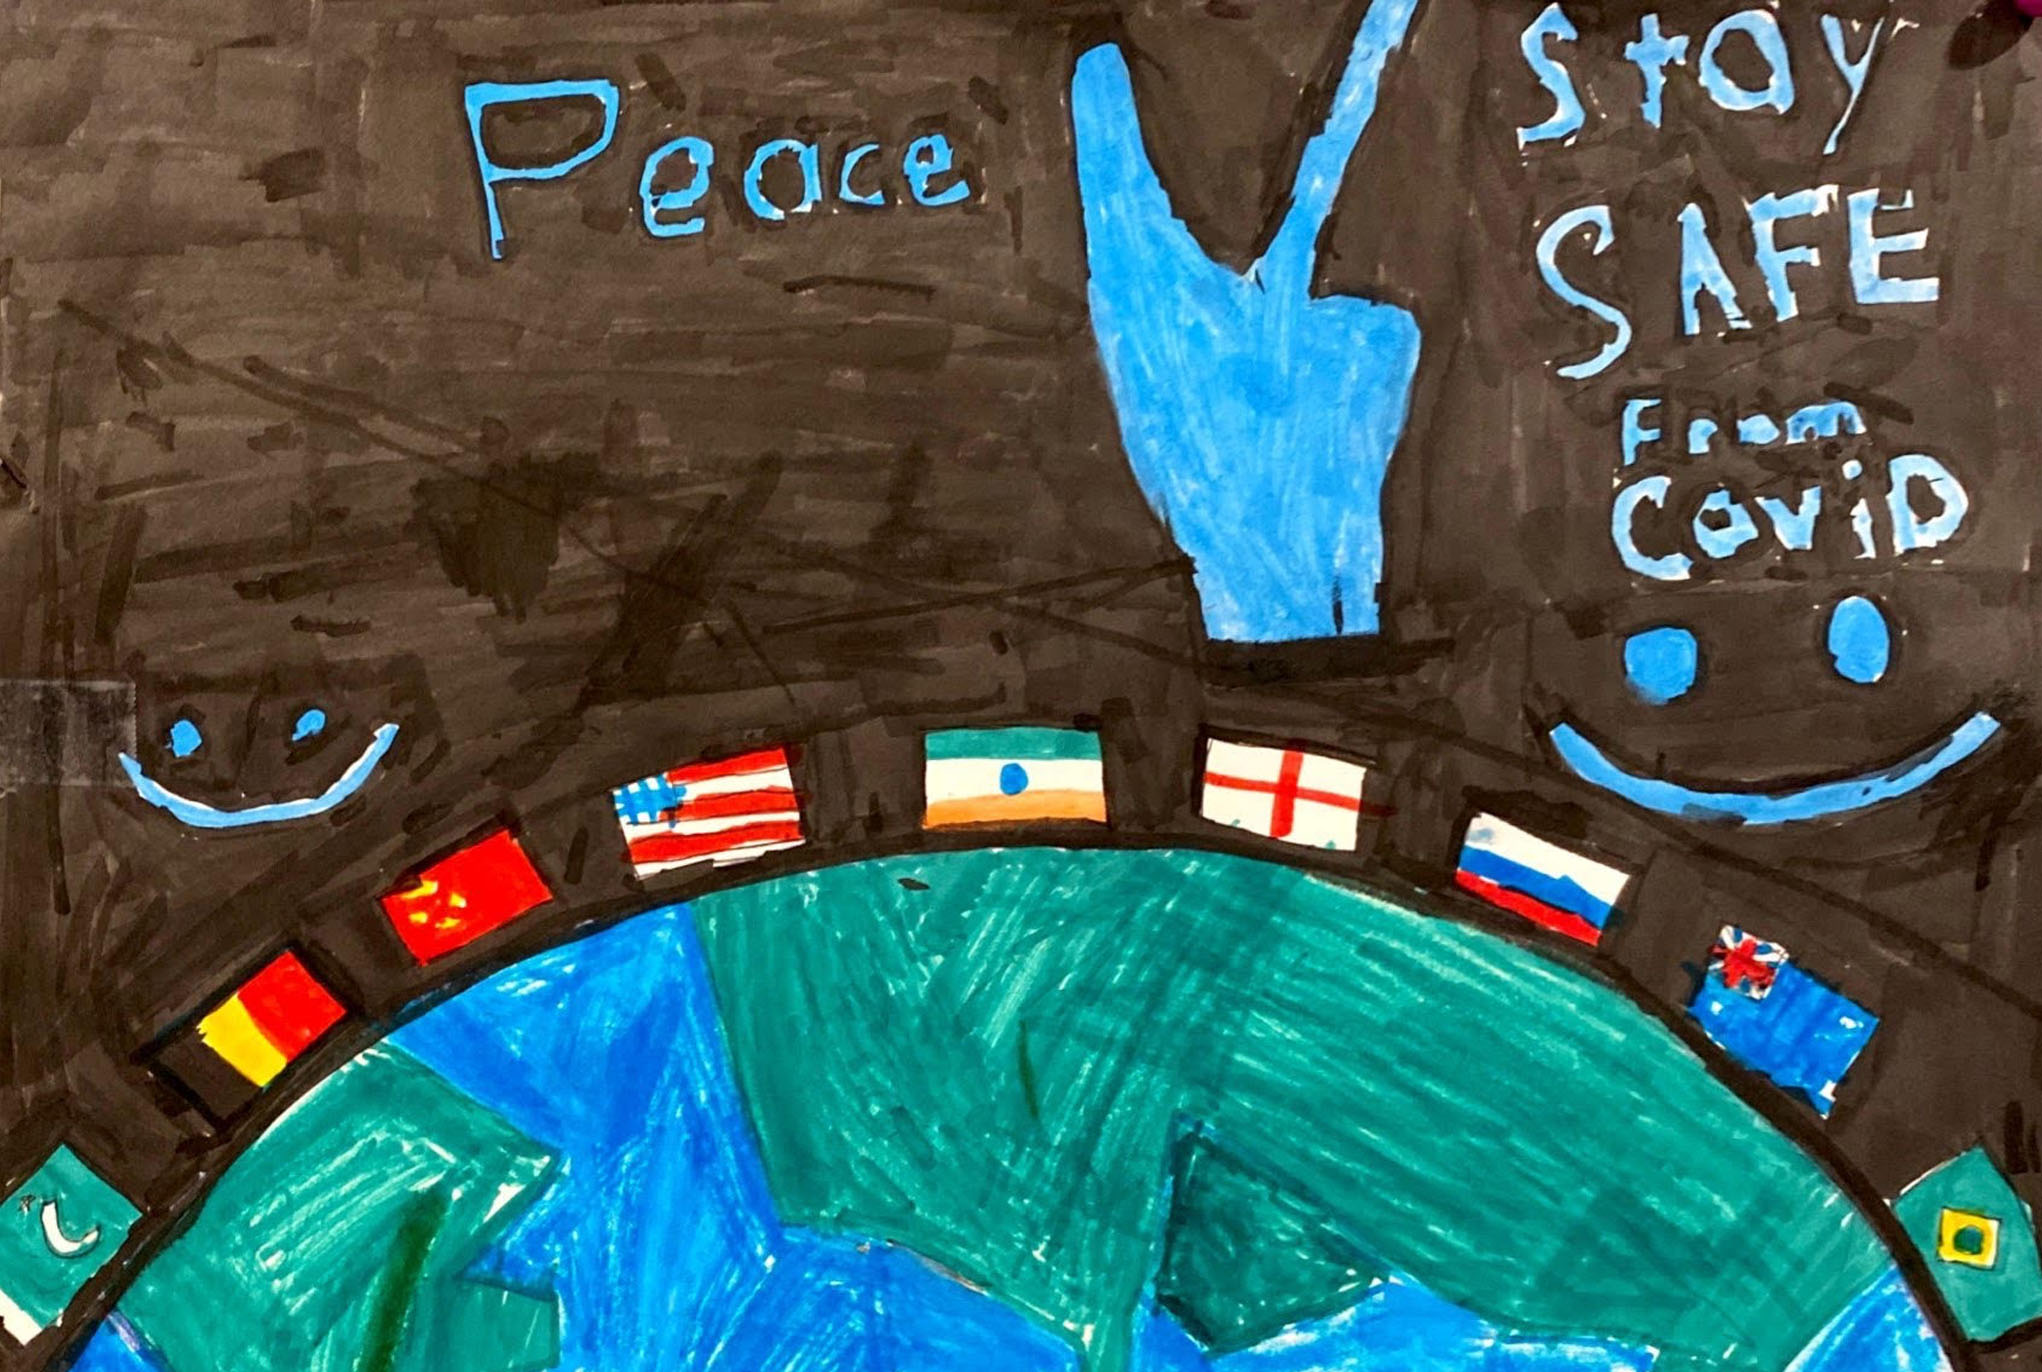 Grade 5 World Peace